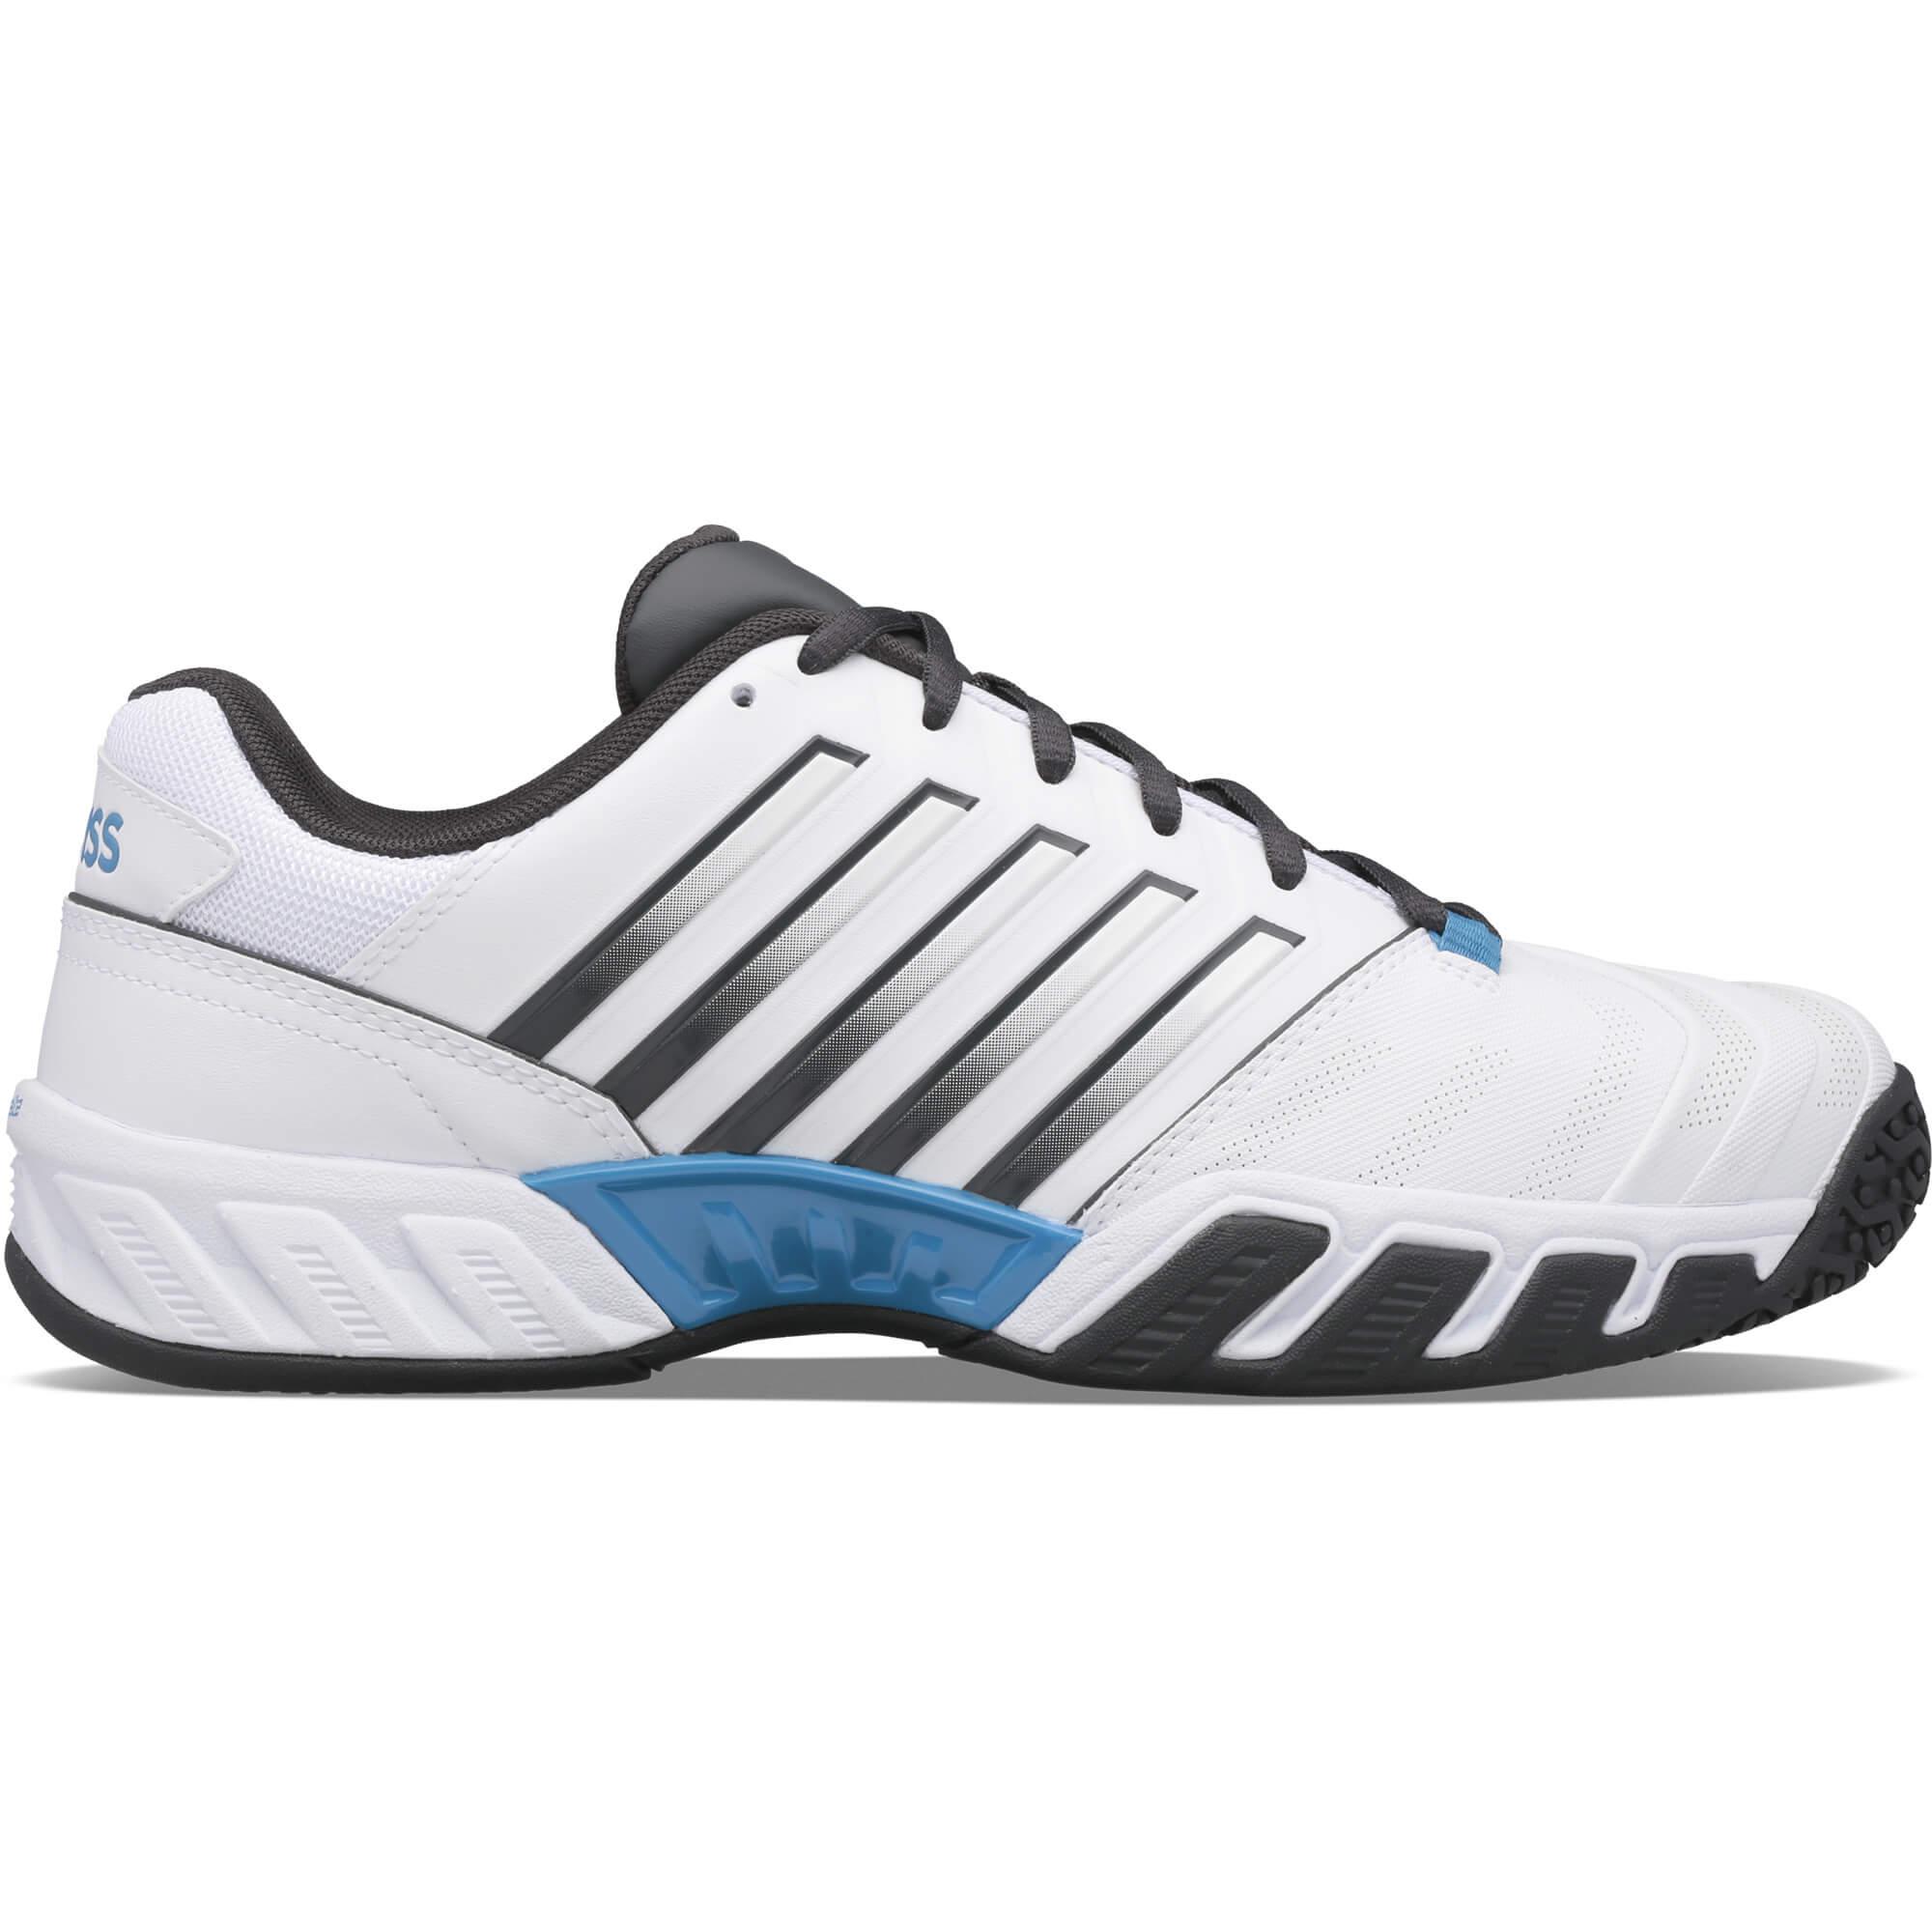 omni tennis shoes